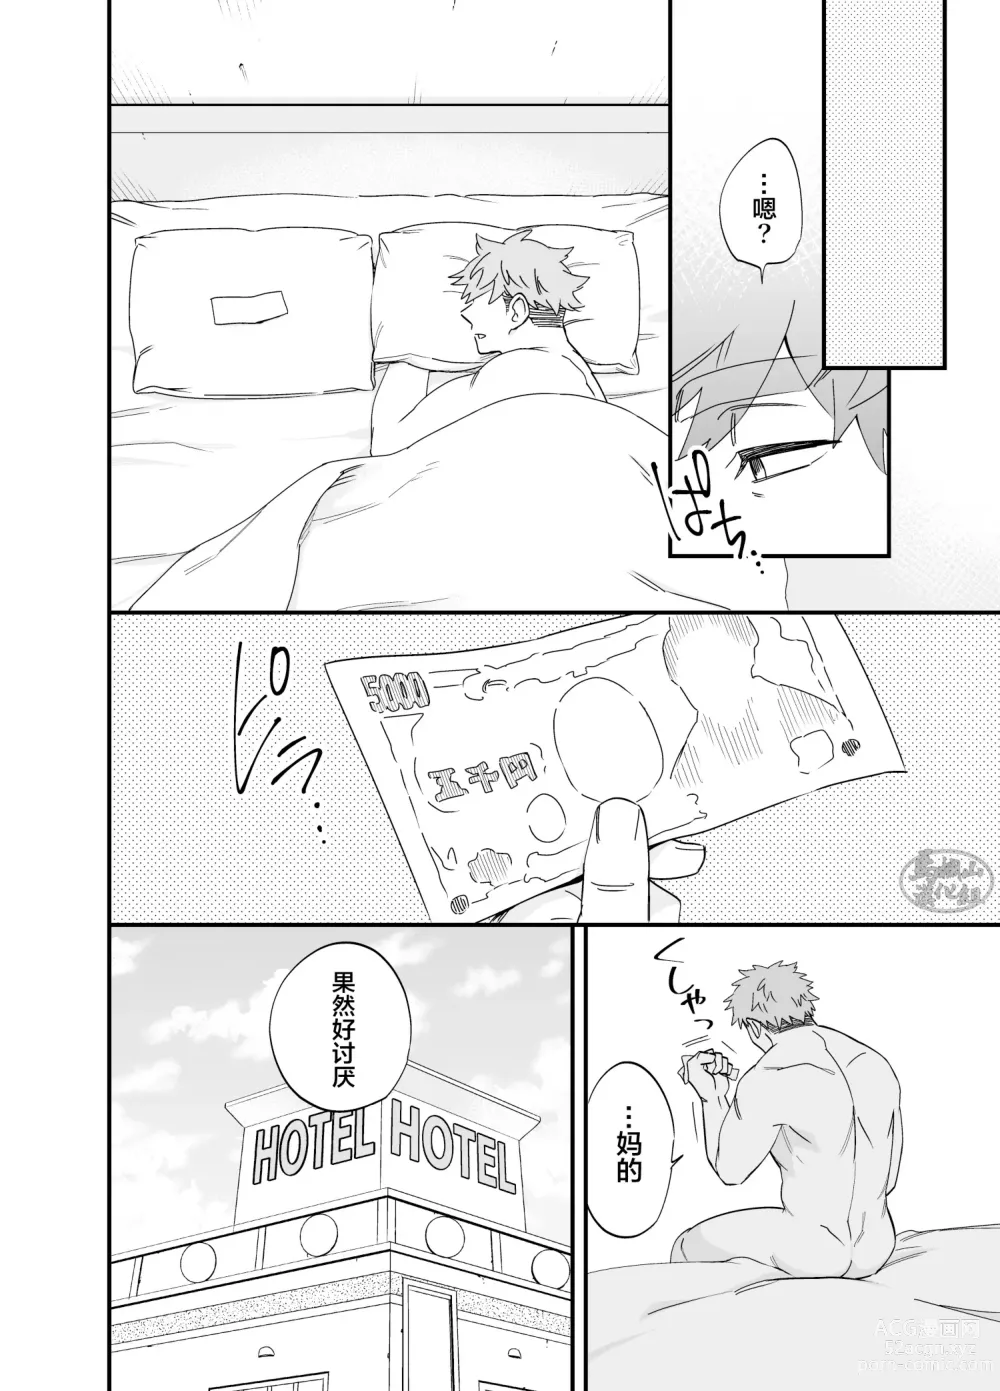 Page 19 of doujinshi Karisome Ookami